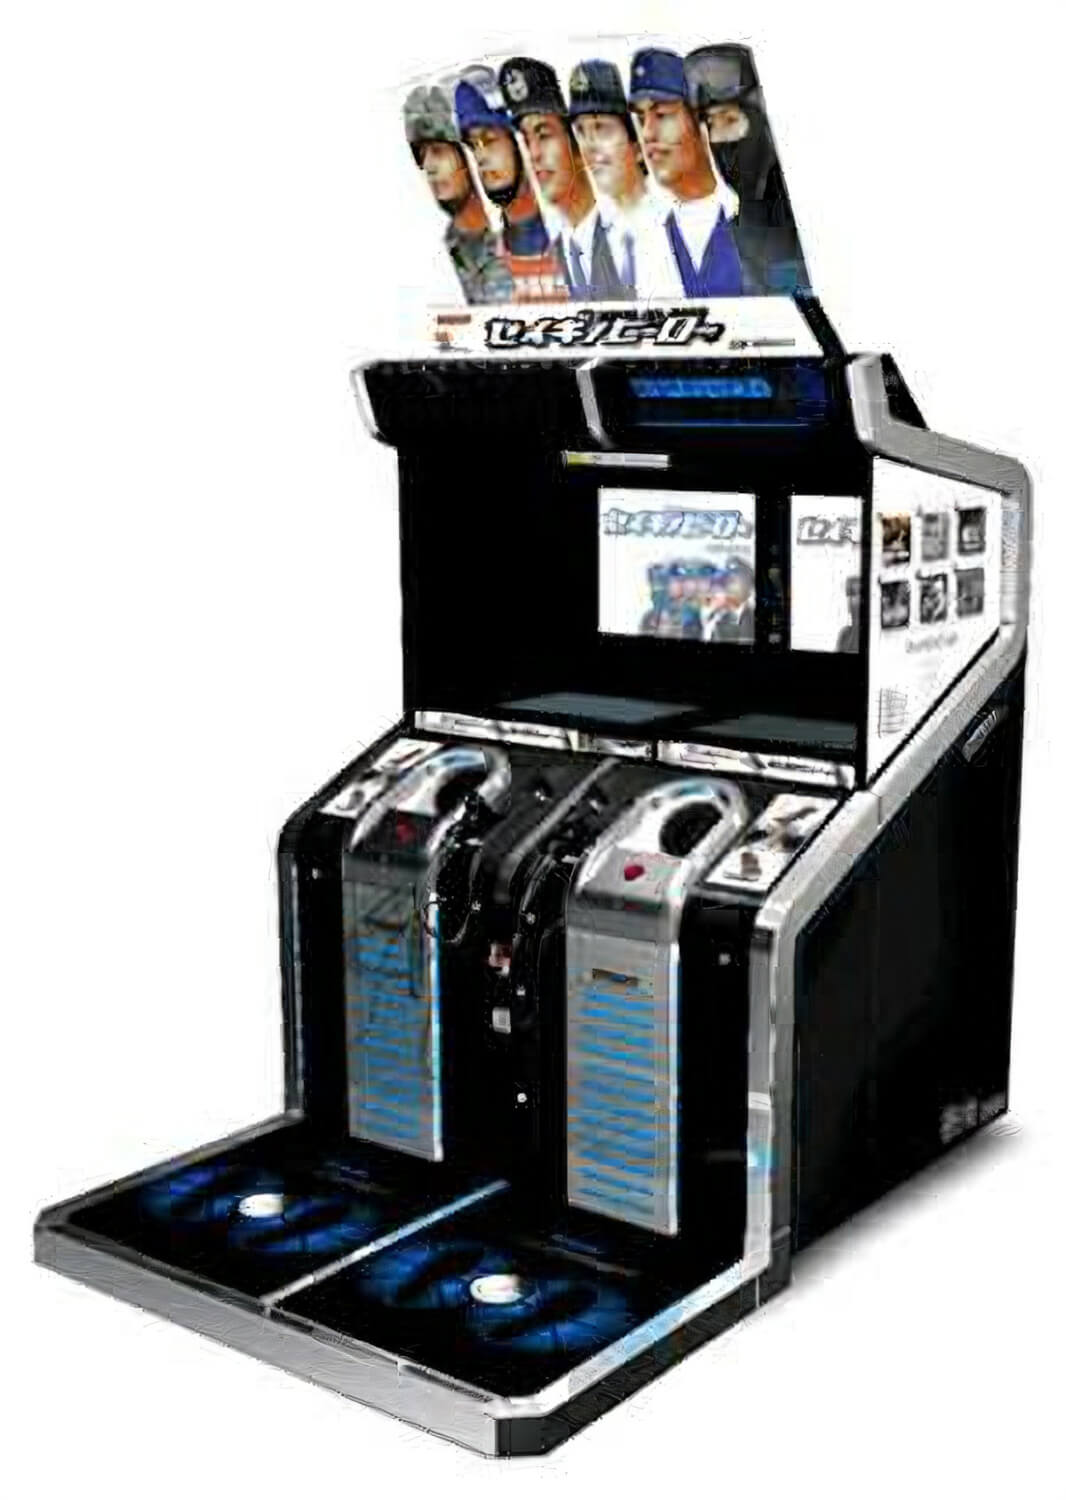 lethal enforcers 2 arcade machine